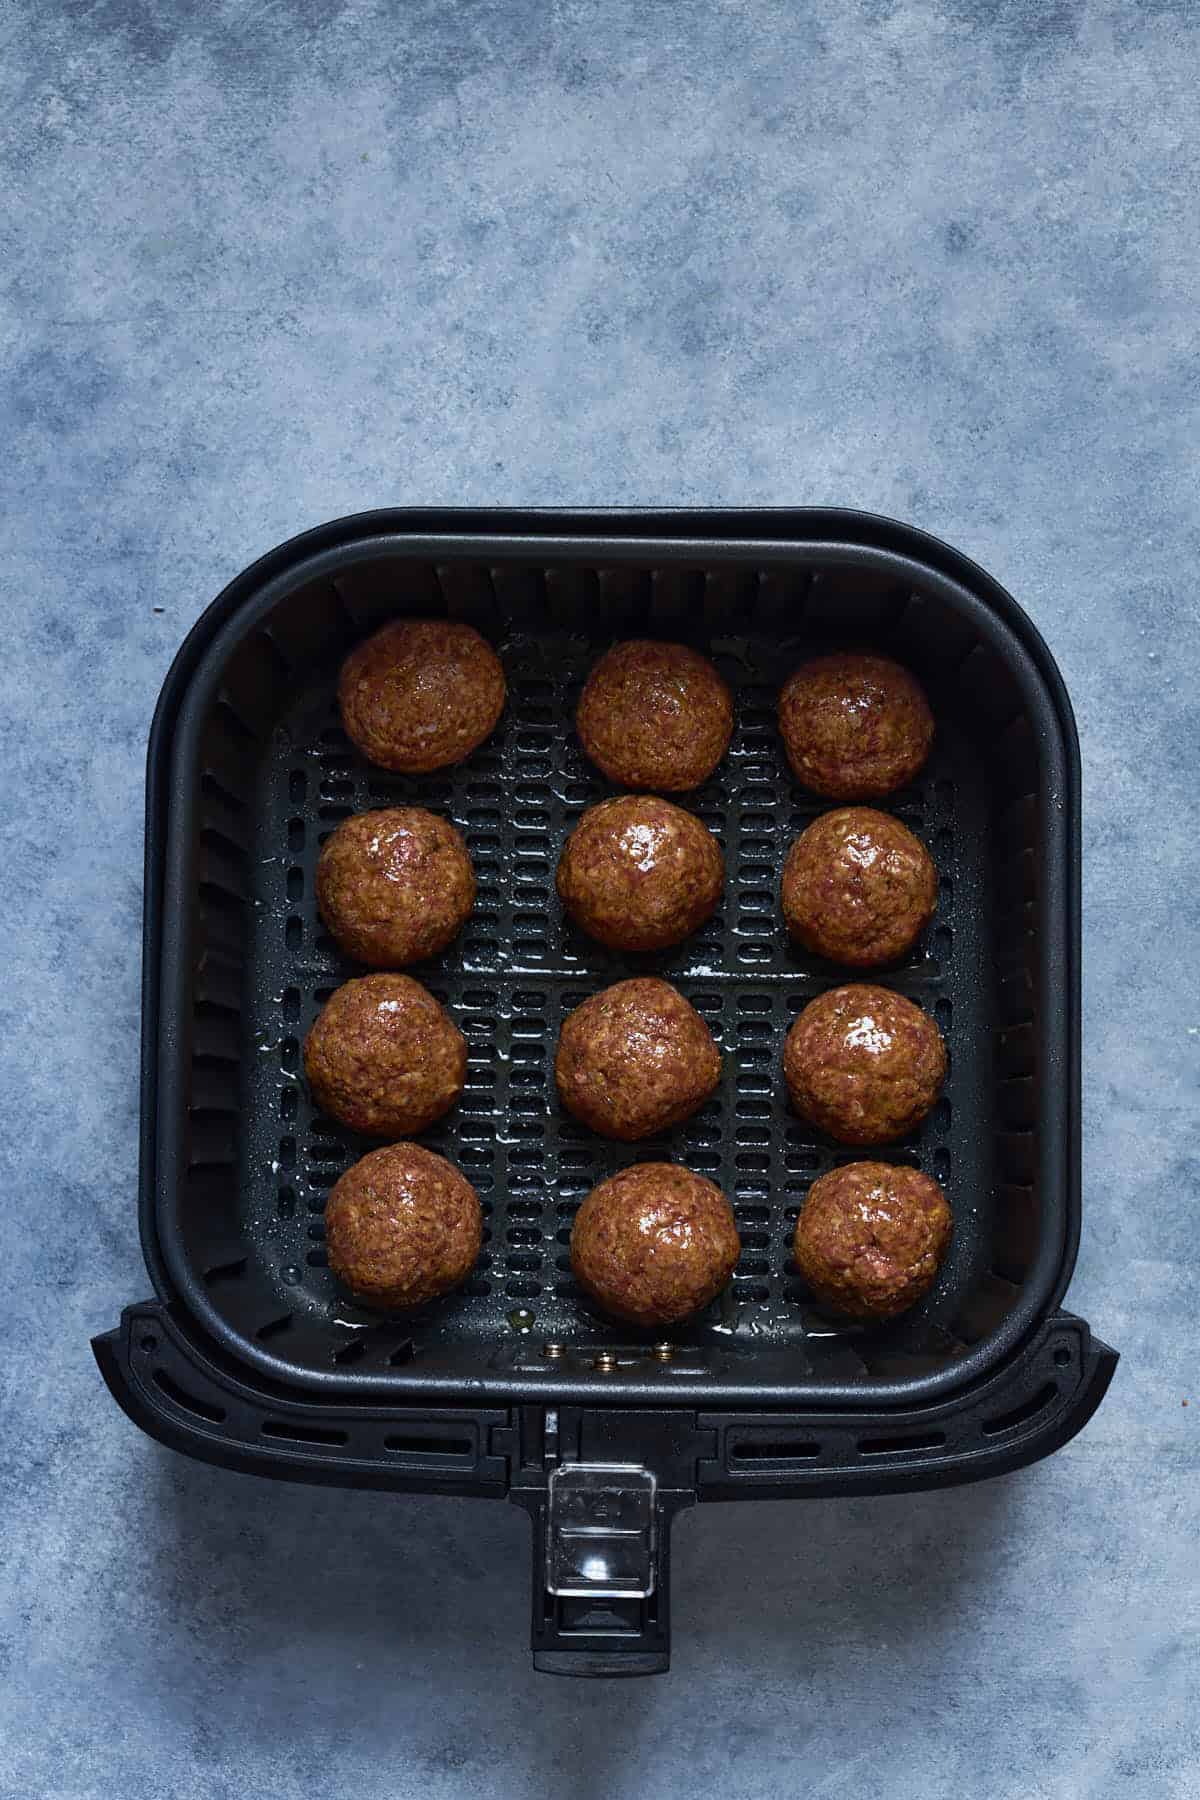 Meatballs inside the air fryer basket before cooking.